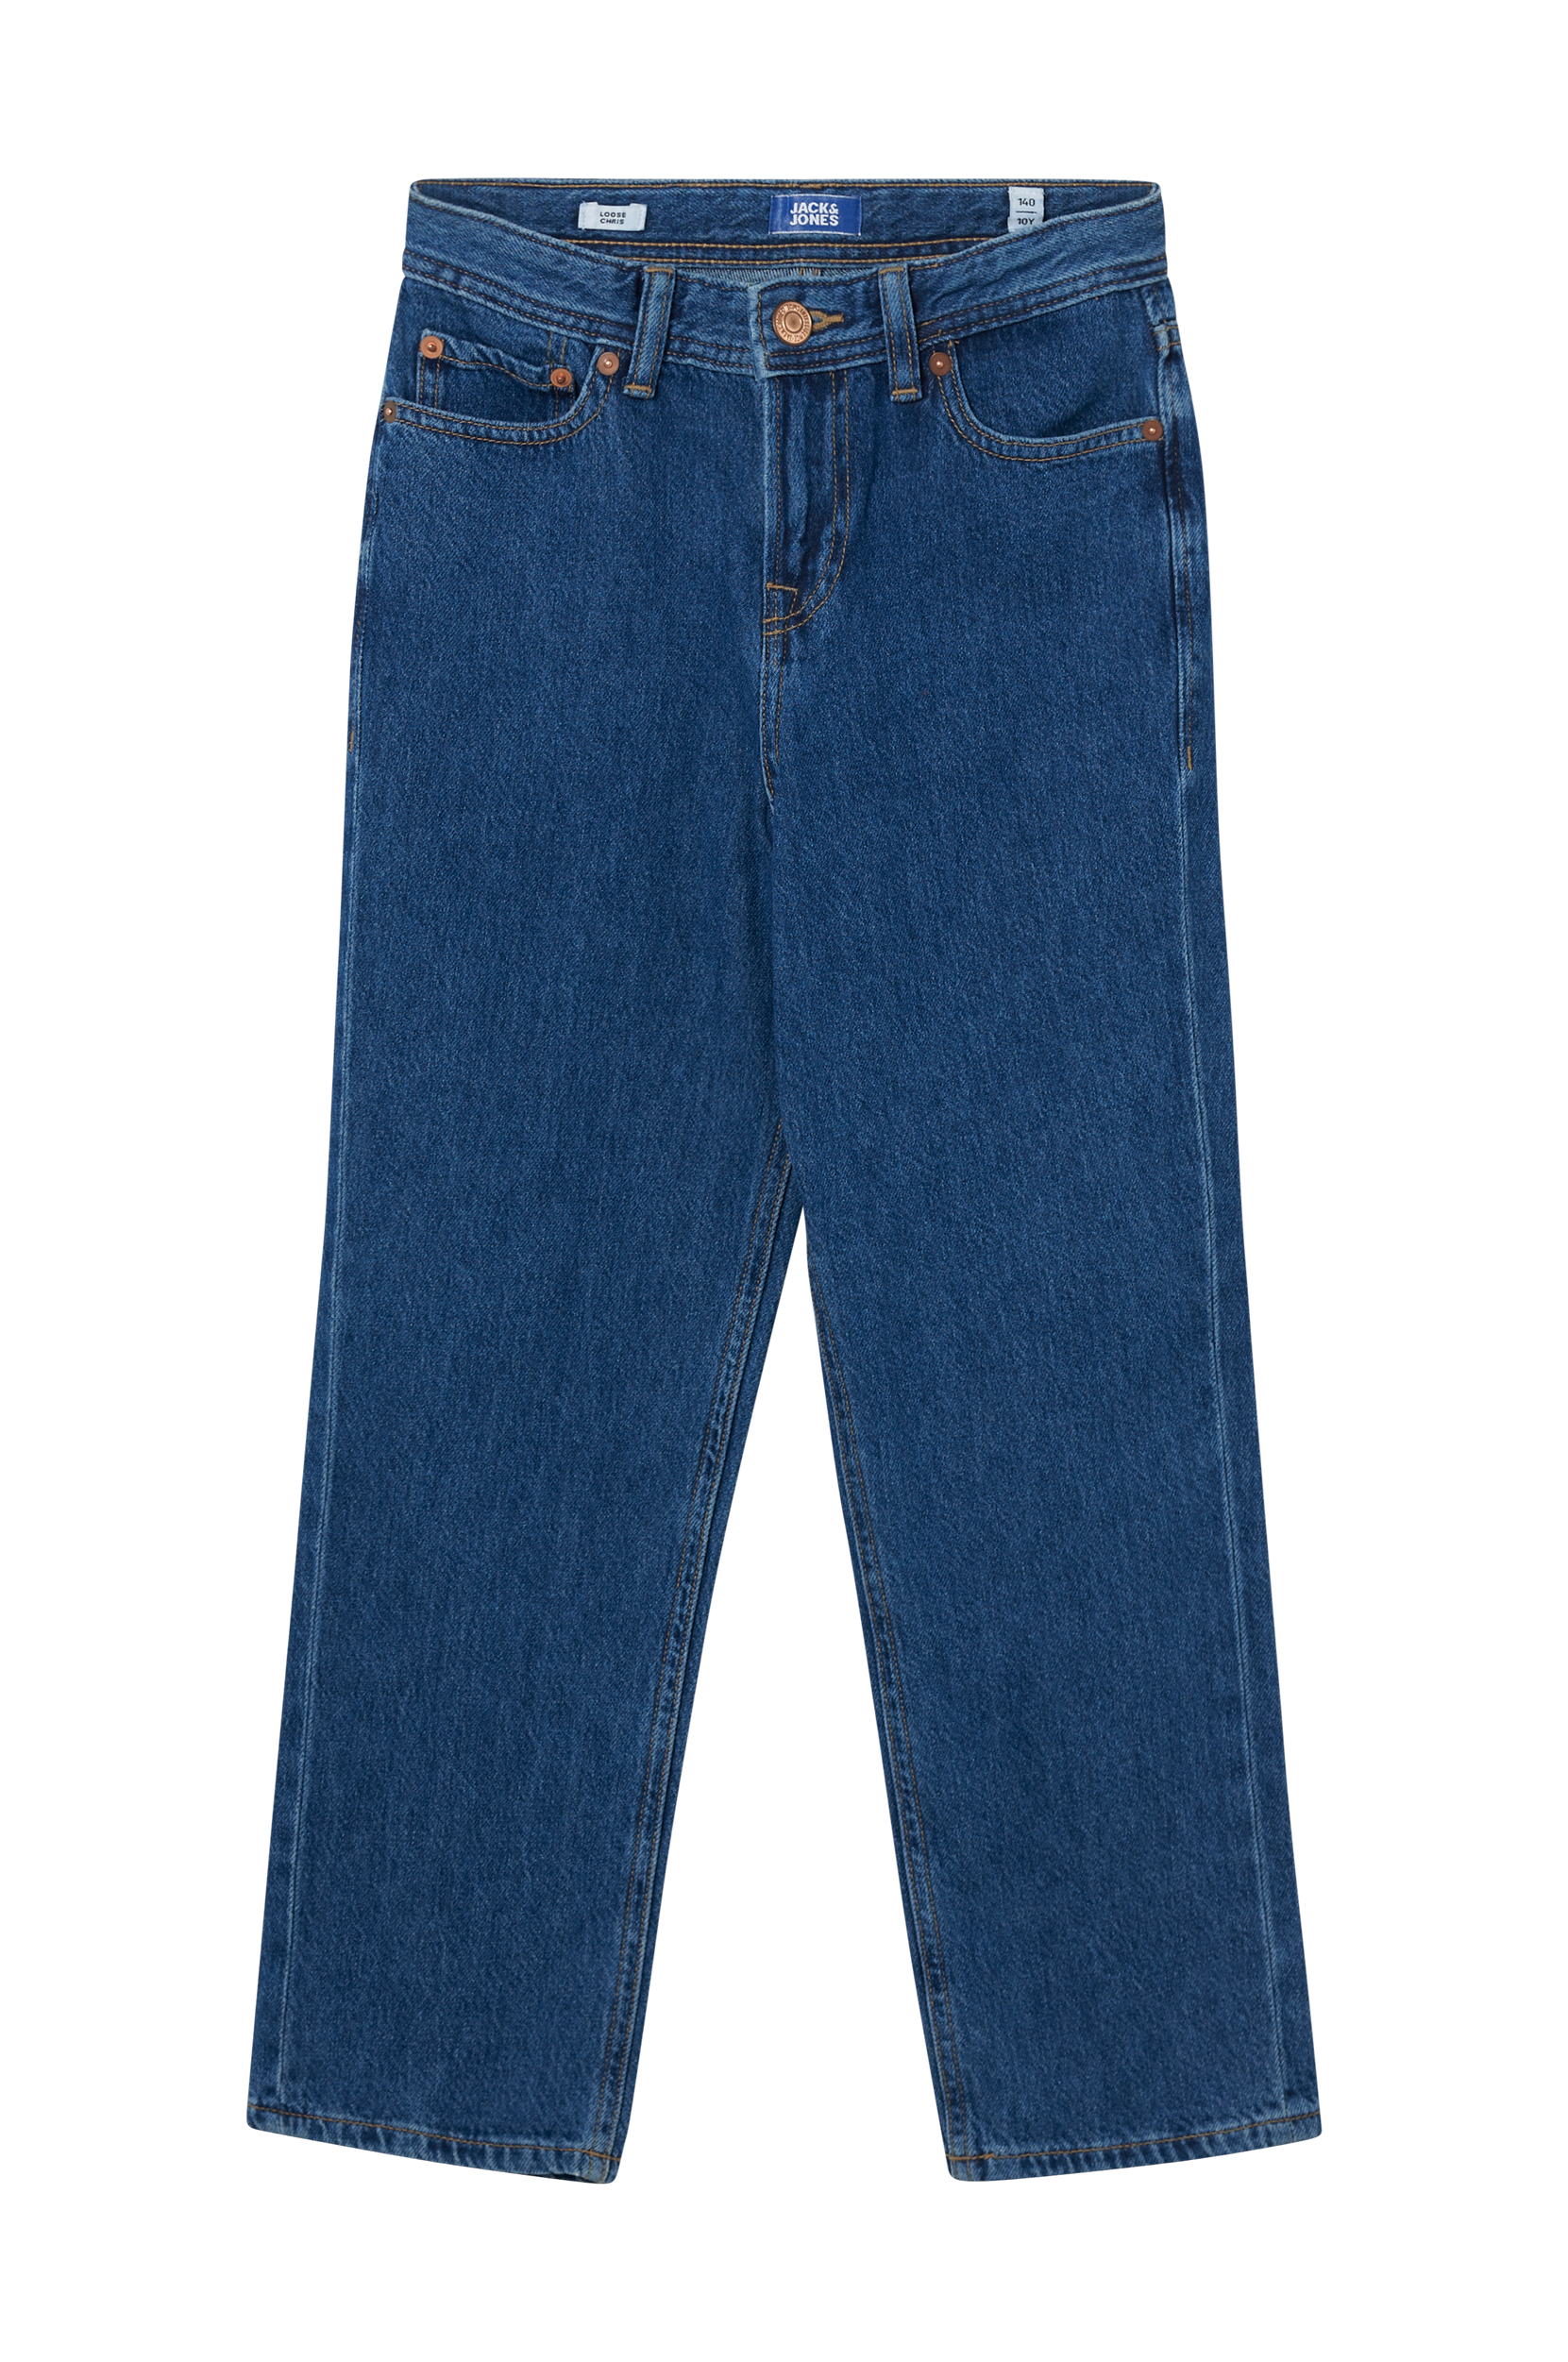 Jack & Jones - Jeans jjiChris jjOriginal MF 723 - Blå - 140